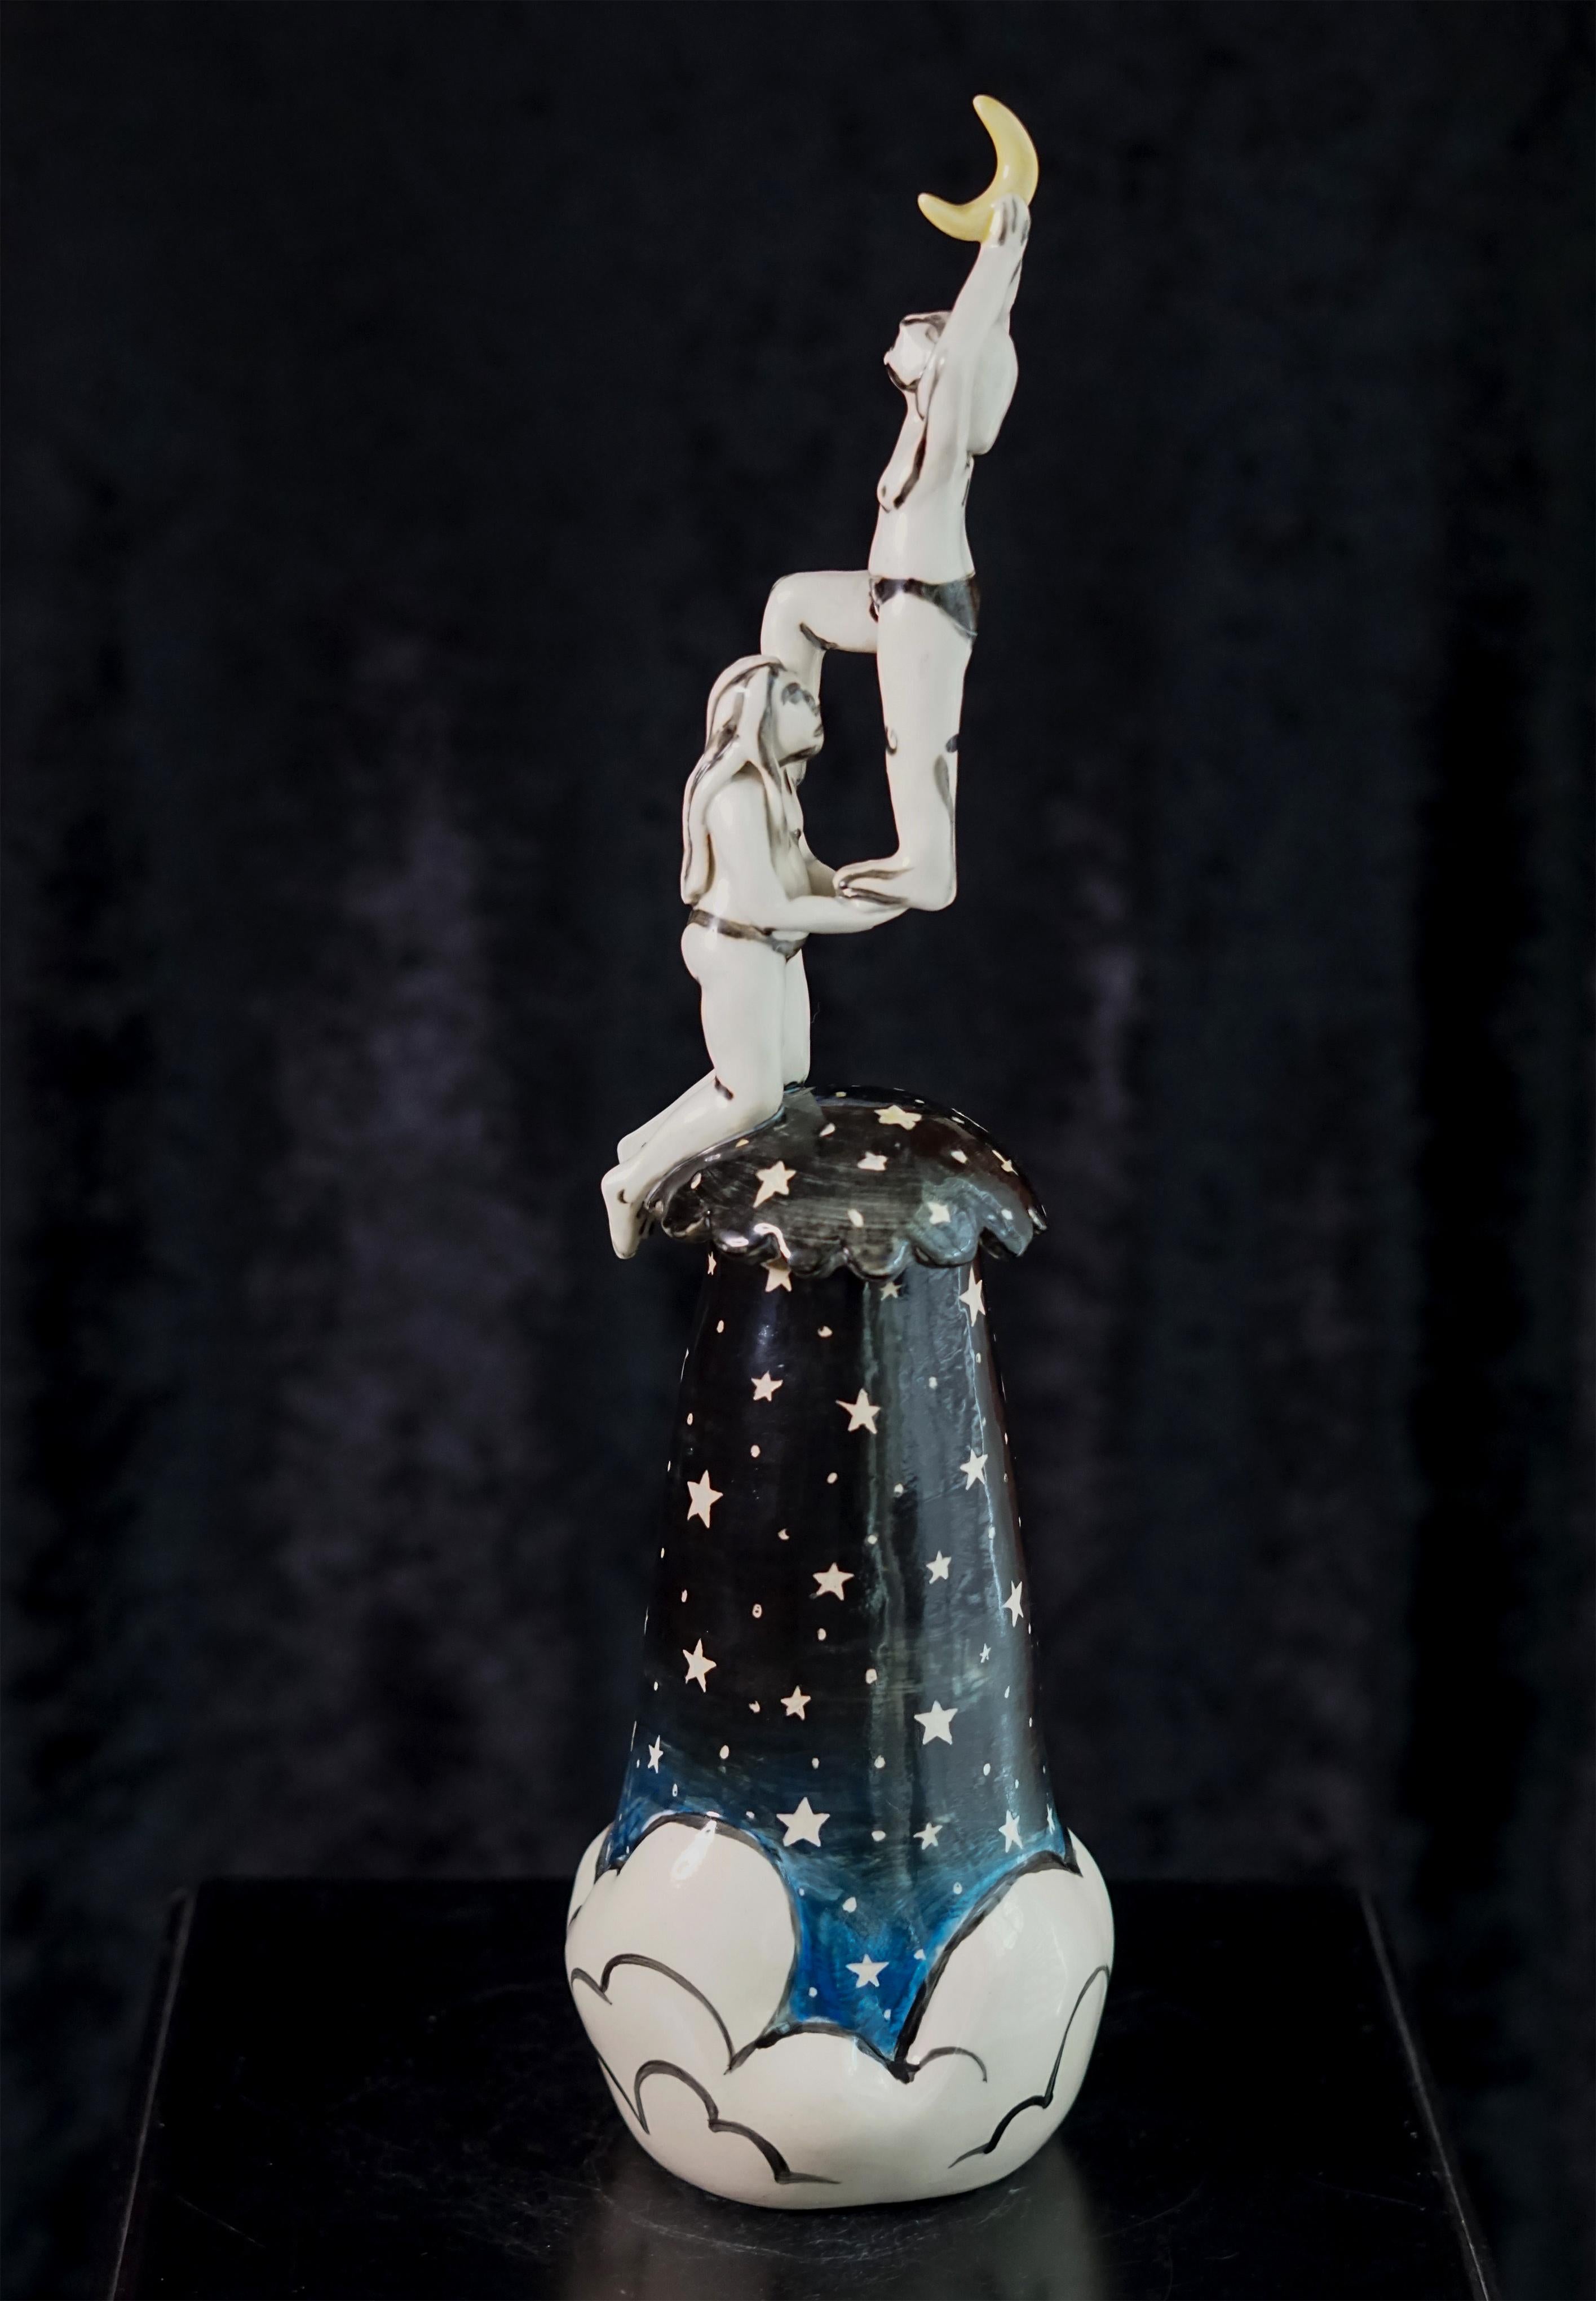 Alex Hodge Nude Sculpture – The Night We Hung the Moon,  Handgefertigte Porzellanskulptur